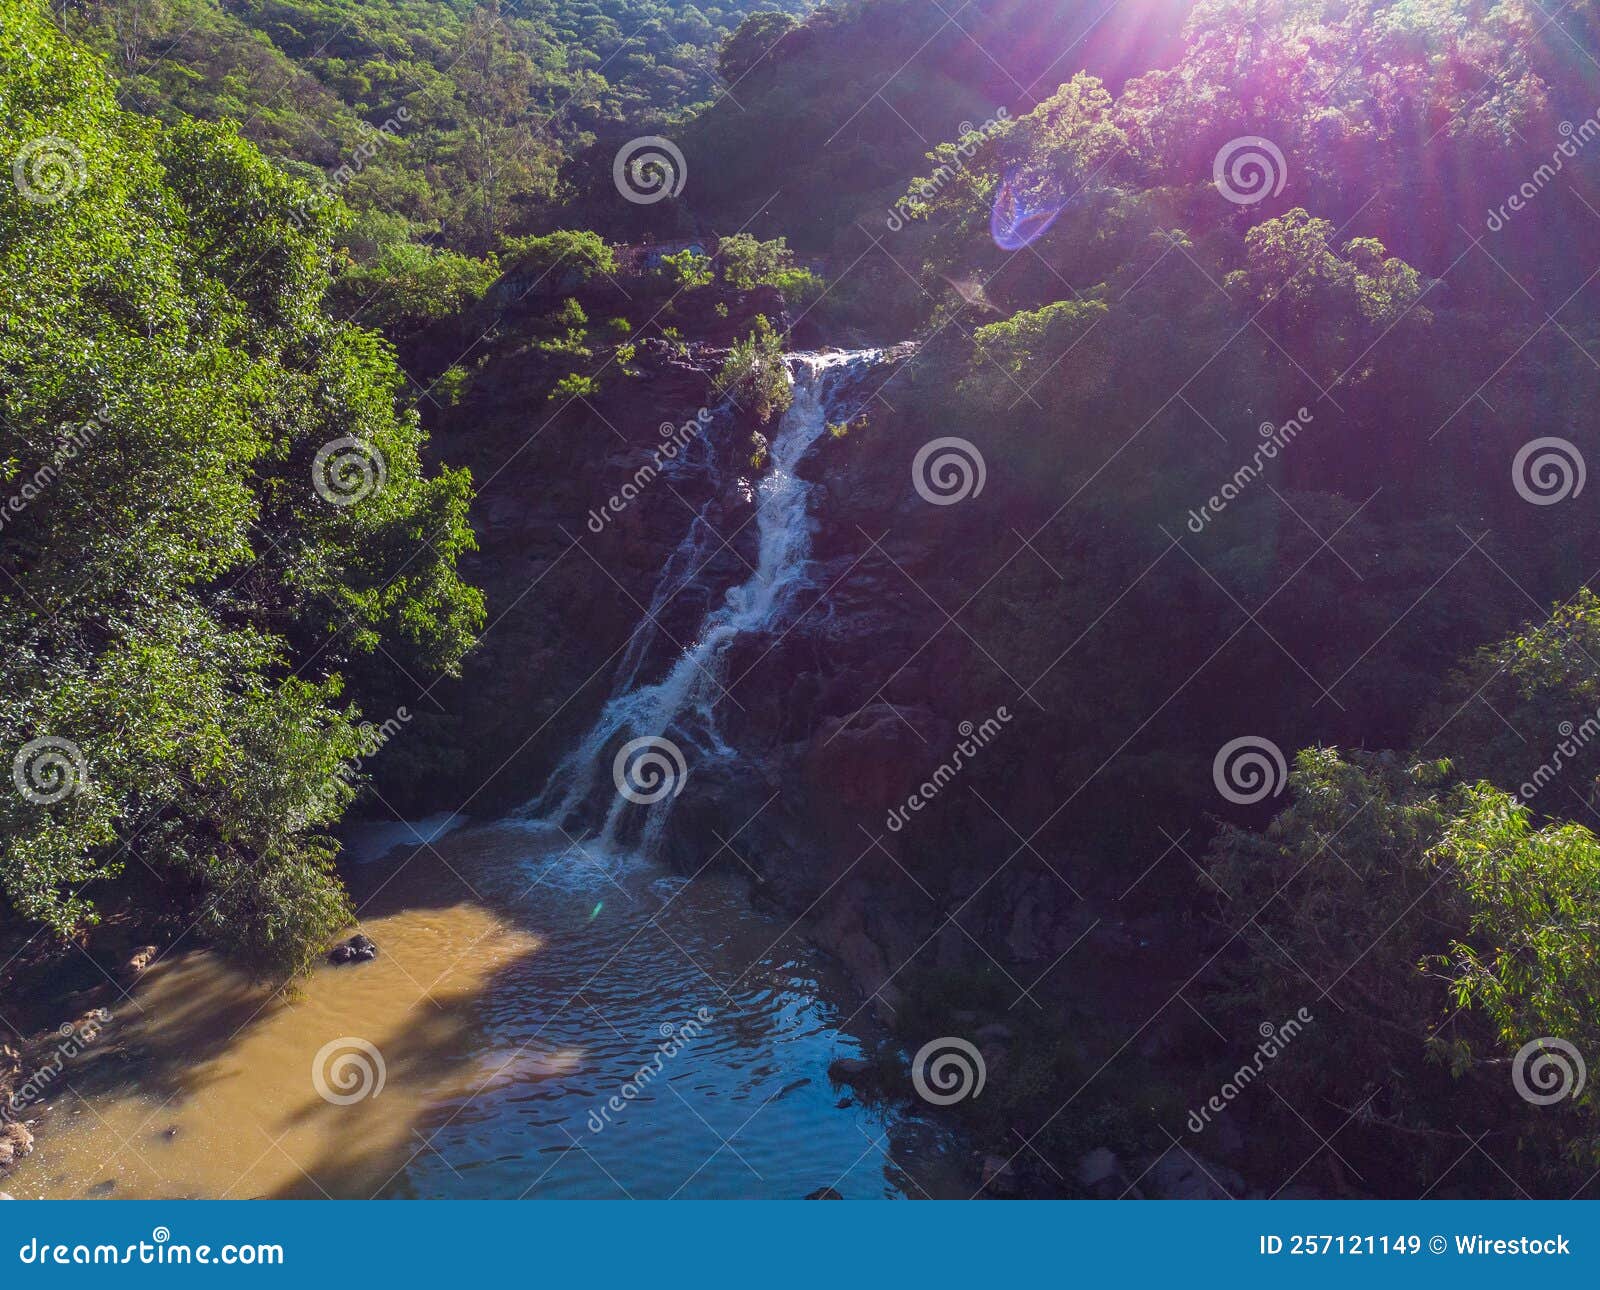 beautiful flowing waterfall in los filtros viejos park at morelia, michoacan, mexico